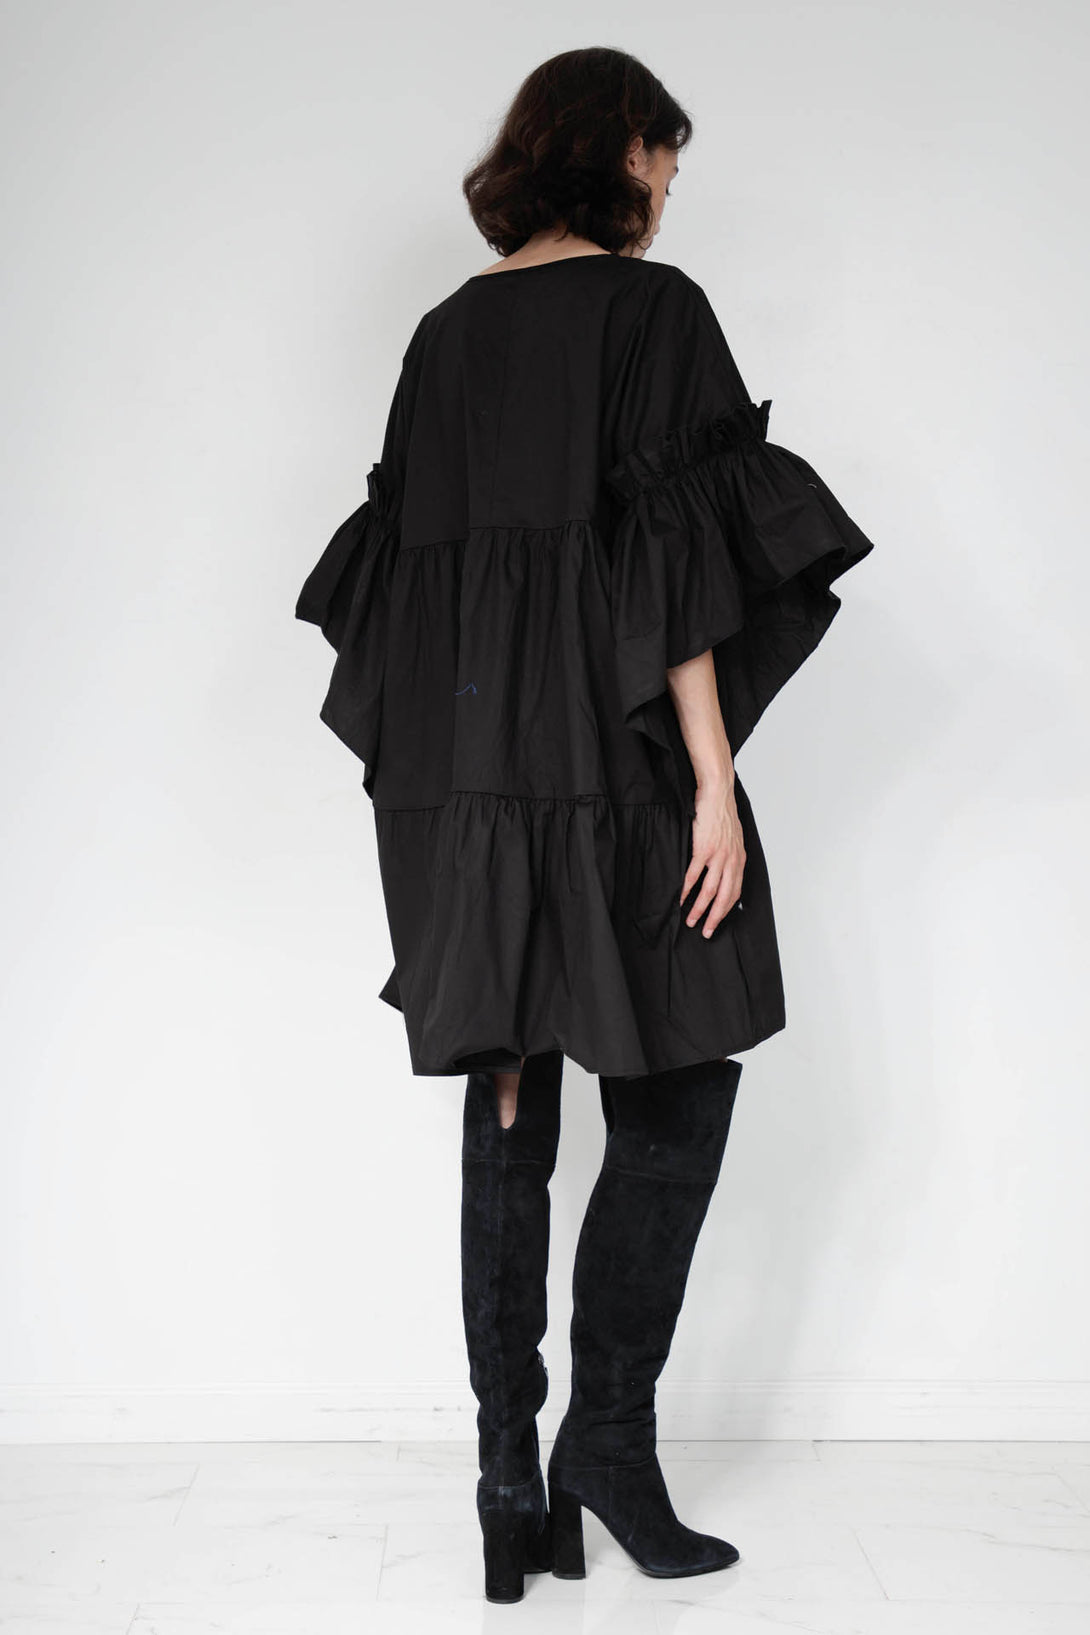 black midi dress women, knee length cocktail dress, black midi dress summer, HT 360 Collective,